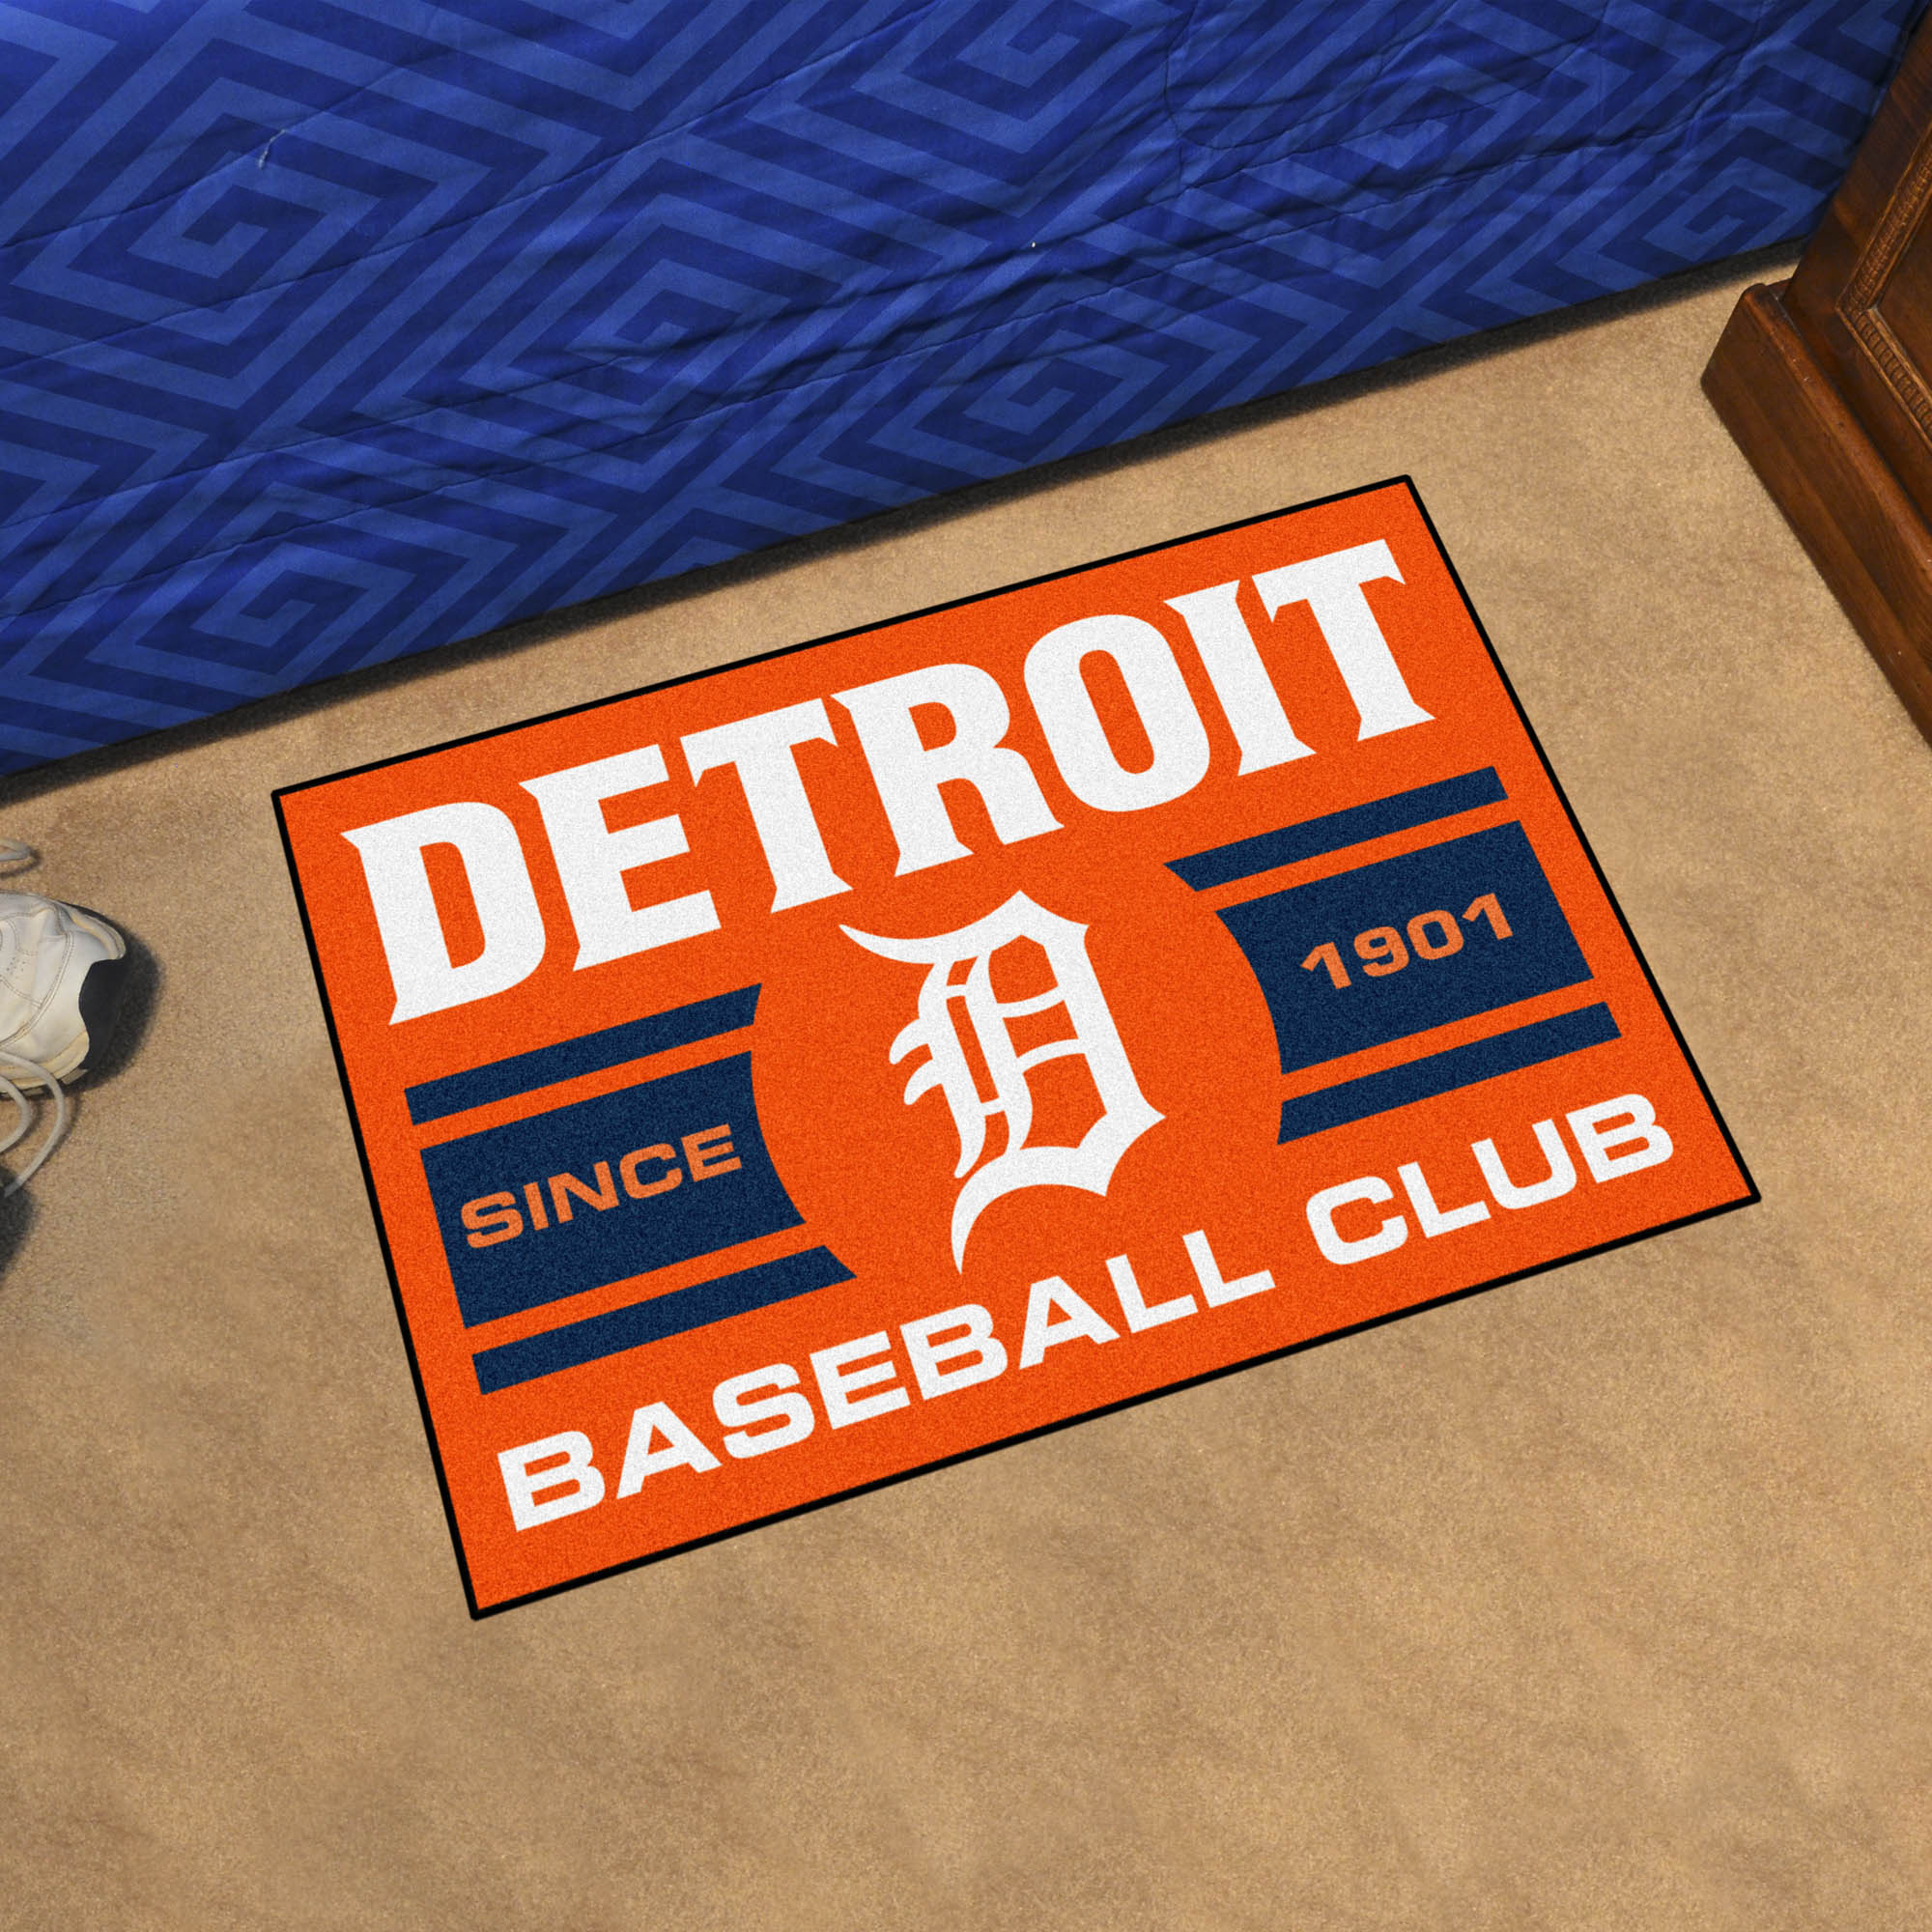 Detroit Tigers Baseball Club Doormat â€“ 19 x 30